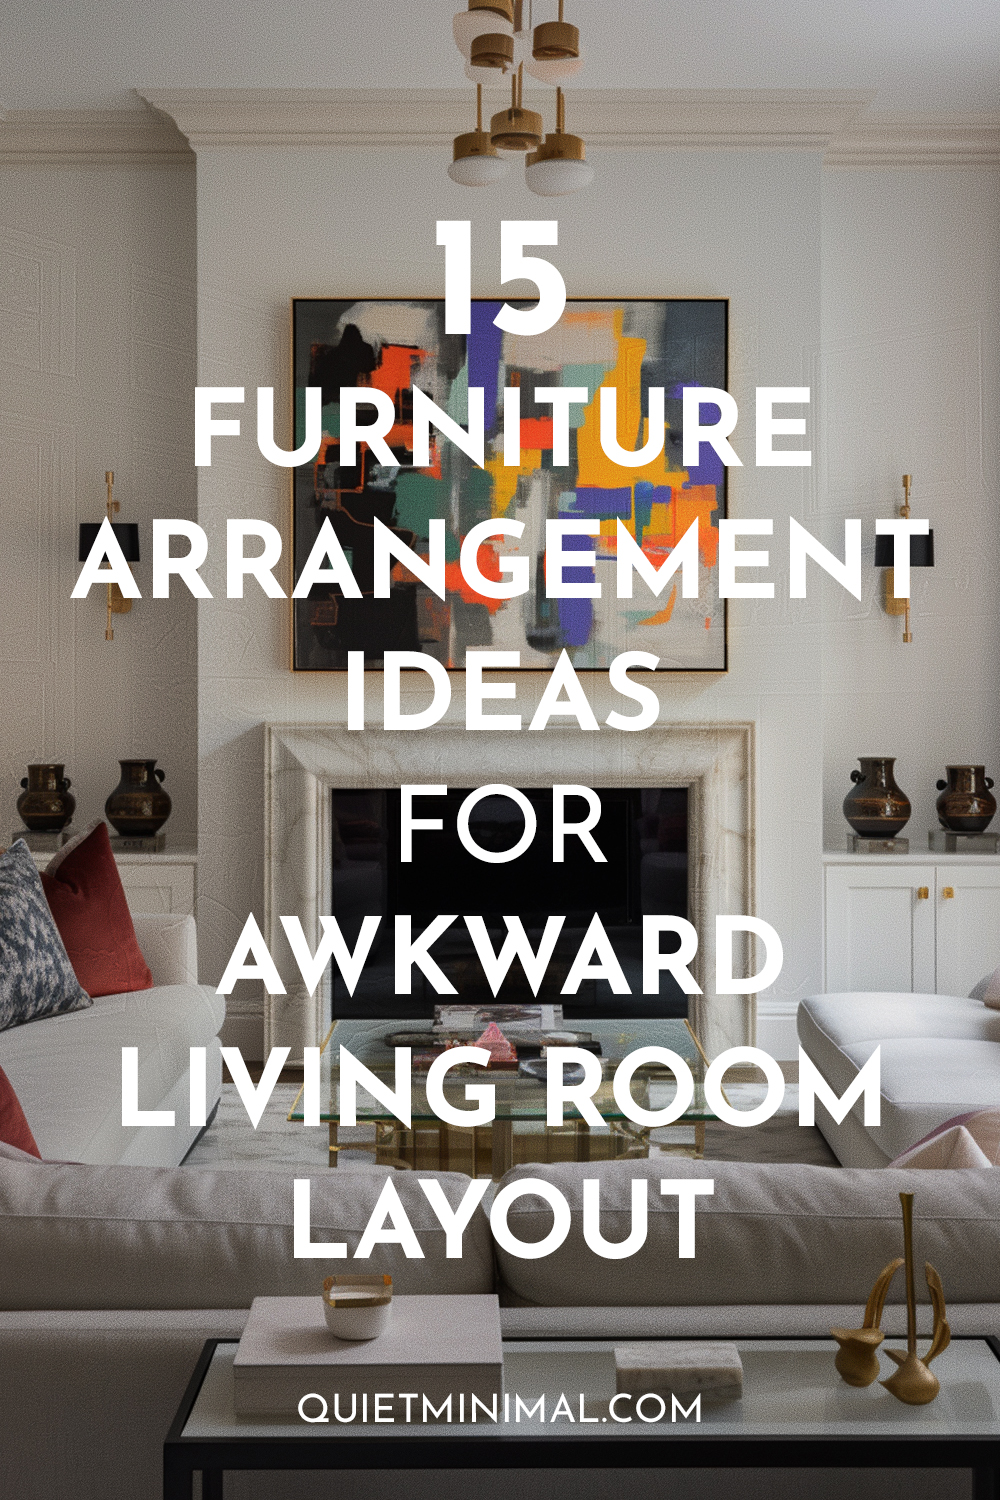 15 furniture arrangement ideas for awkward living room layout.